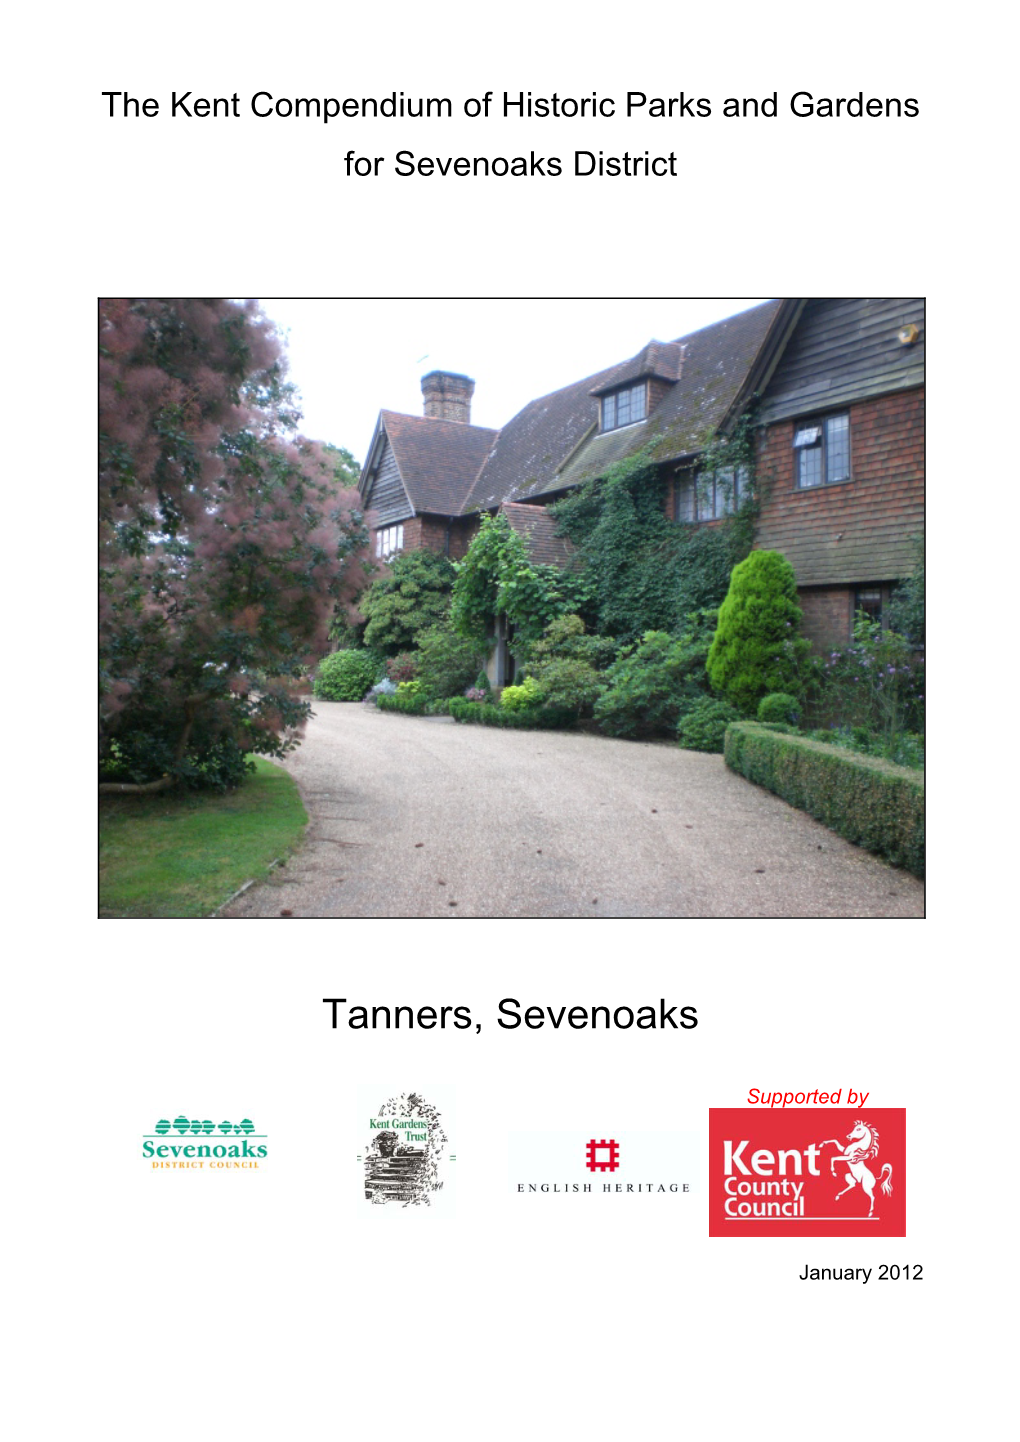 Tanners, Sevenoaks